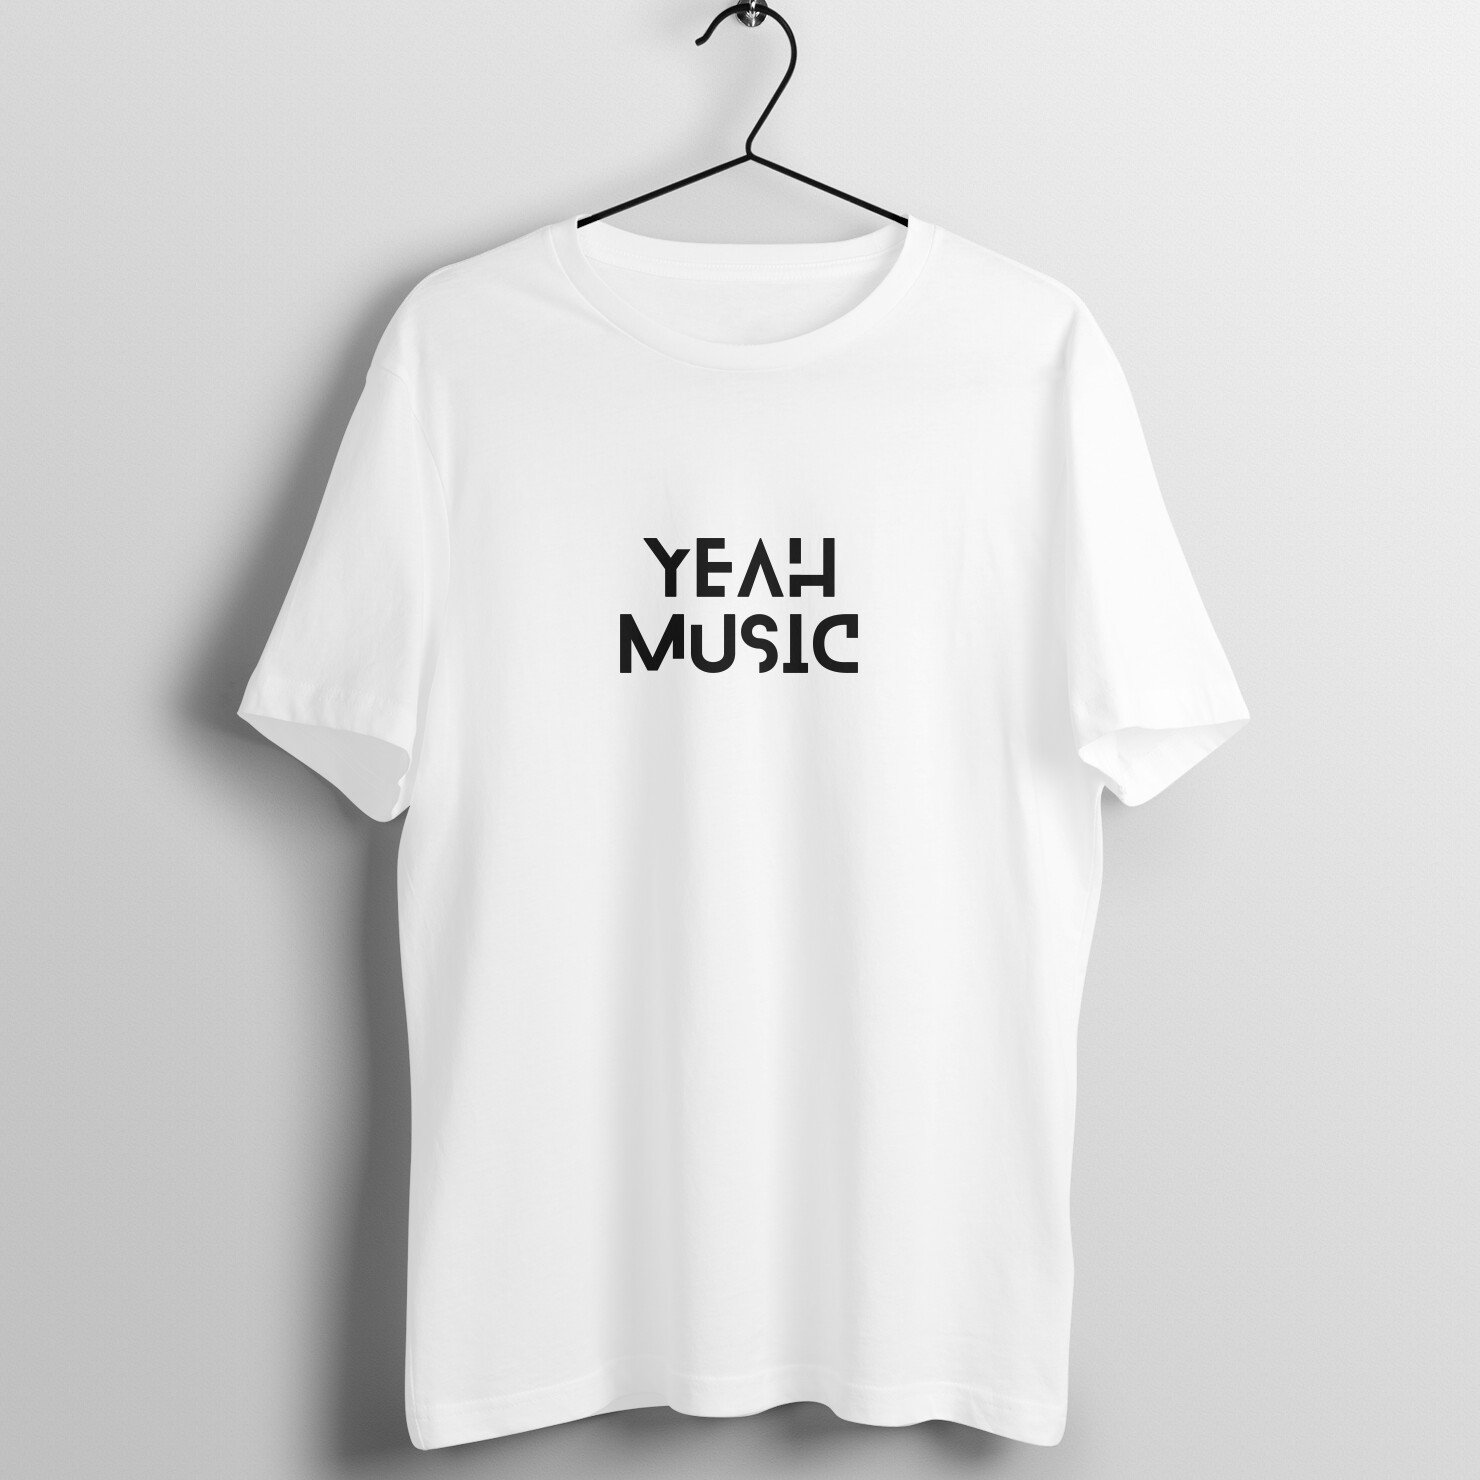 Yeah Music tshirt - BandAdda Rock Metal Band T-shirt India